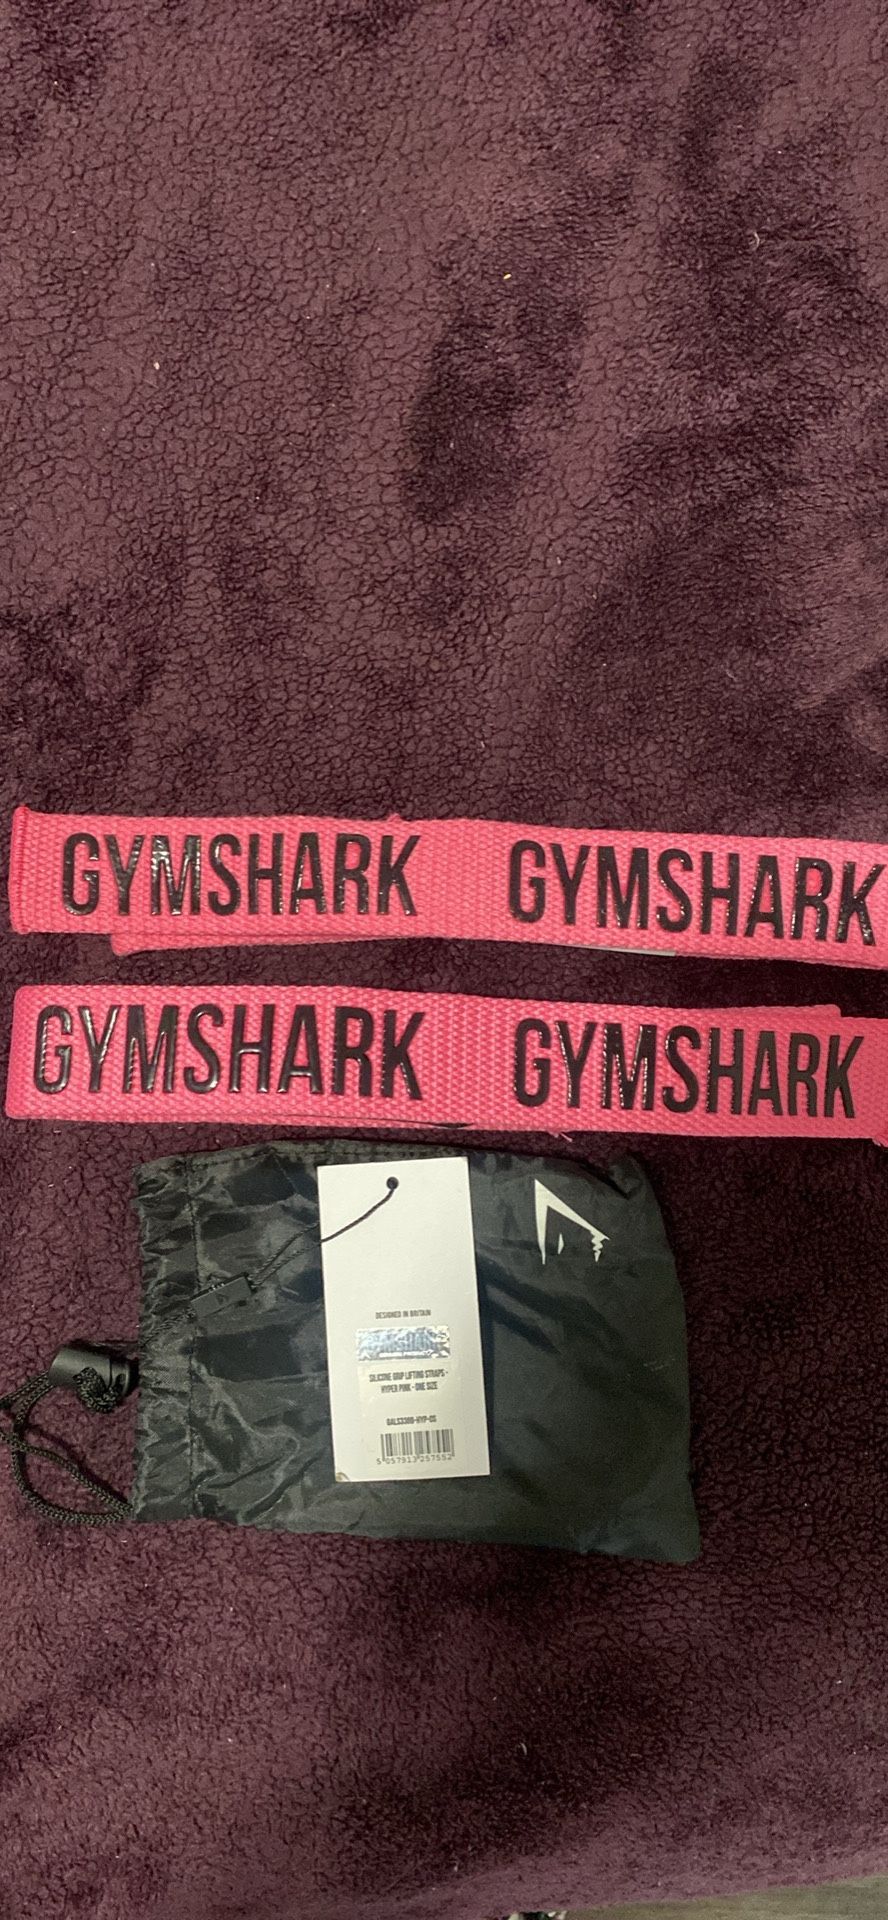 Gym Shark power bands